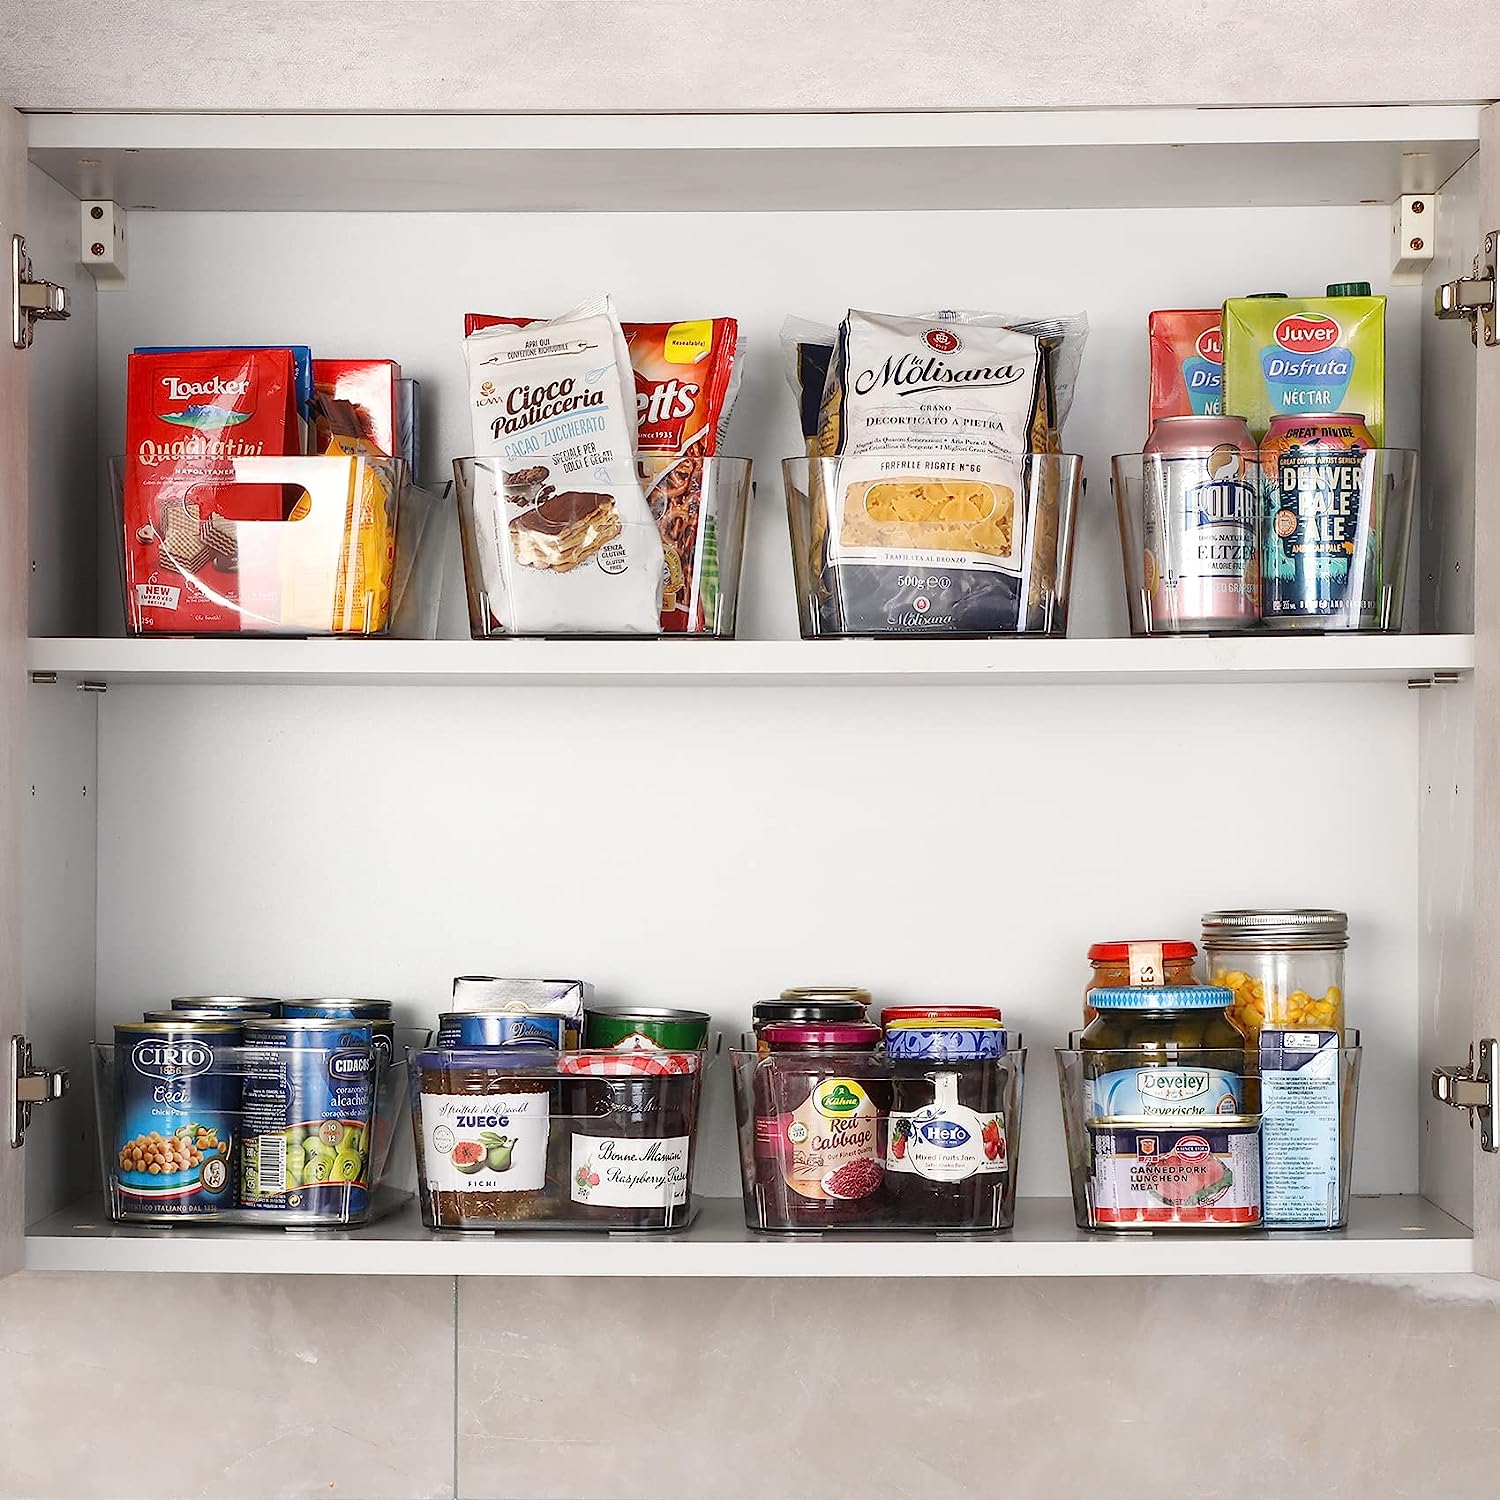 YIHONG Clear Pantry Storage Organizer Bins, 6 Pack Plastic Food Storage Bins  with Handle for Kitchen,Refrigerator, Freezer,Cabinet Organization and  Storage